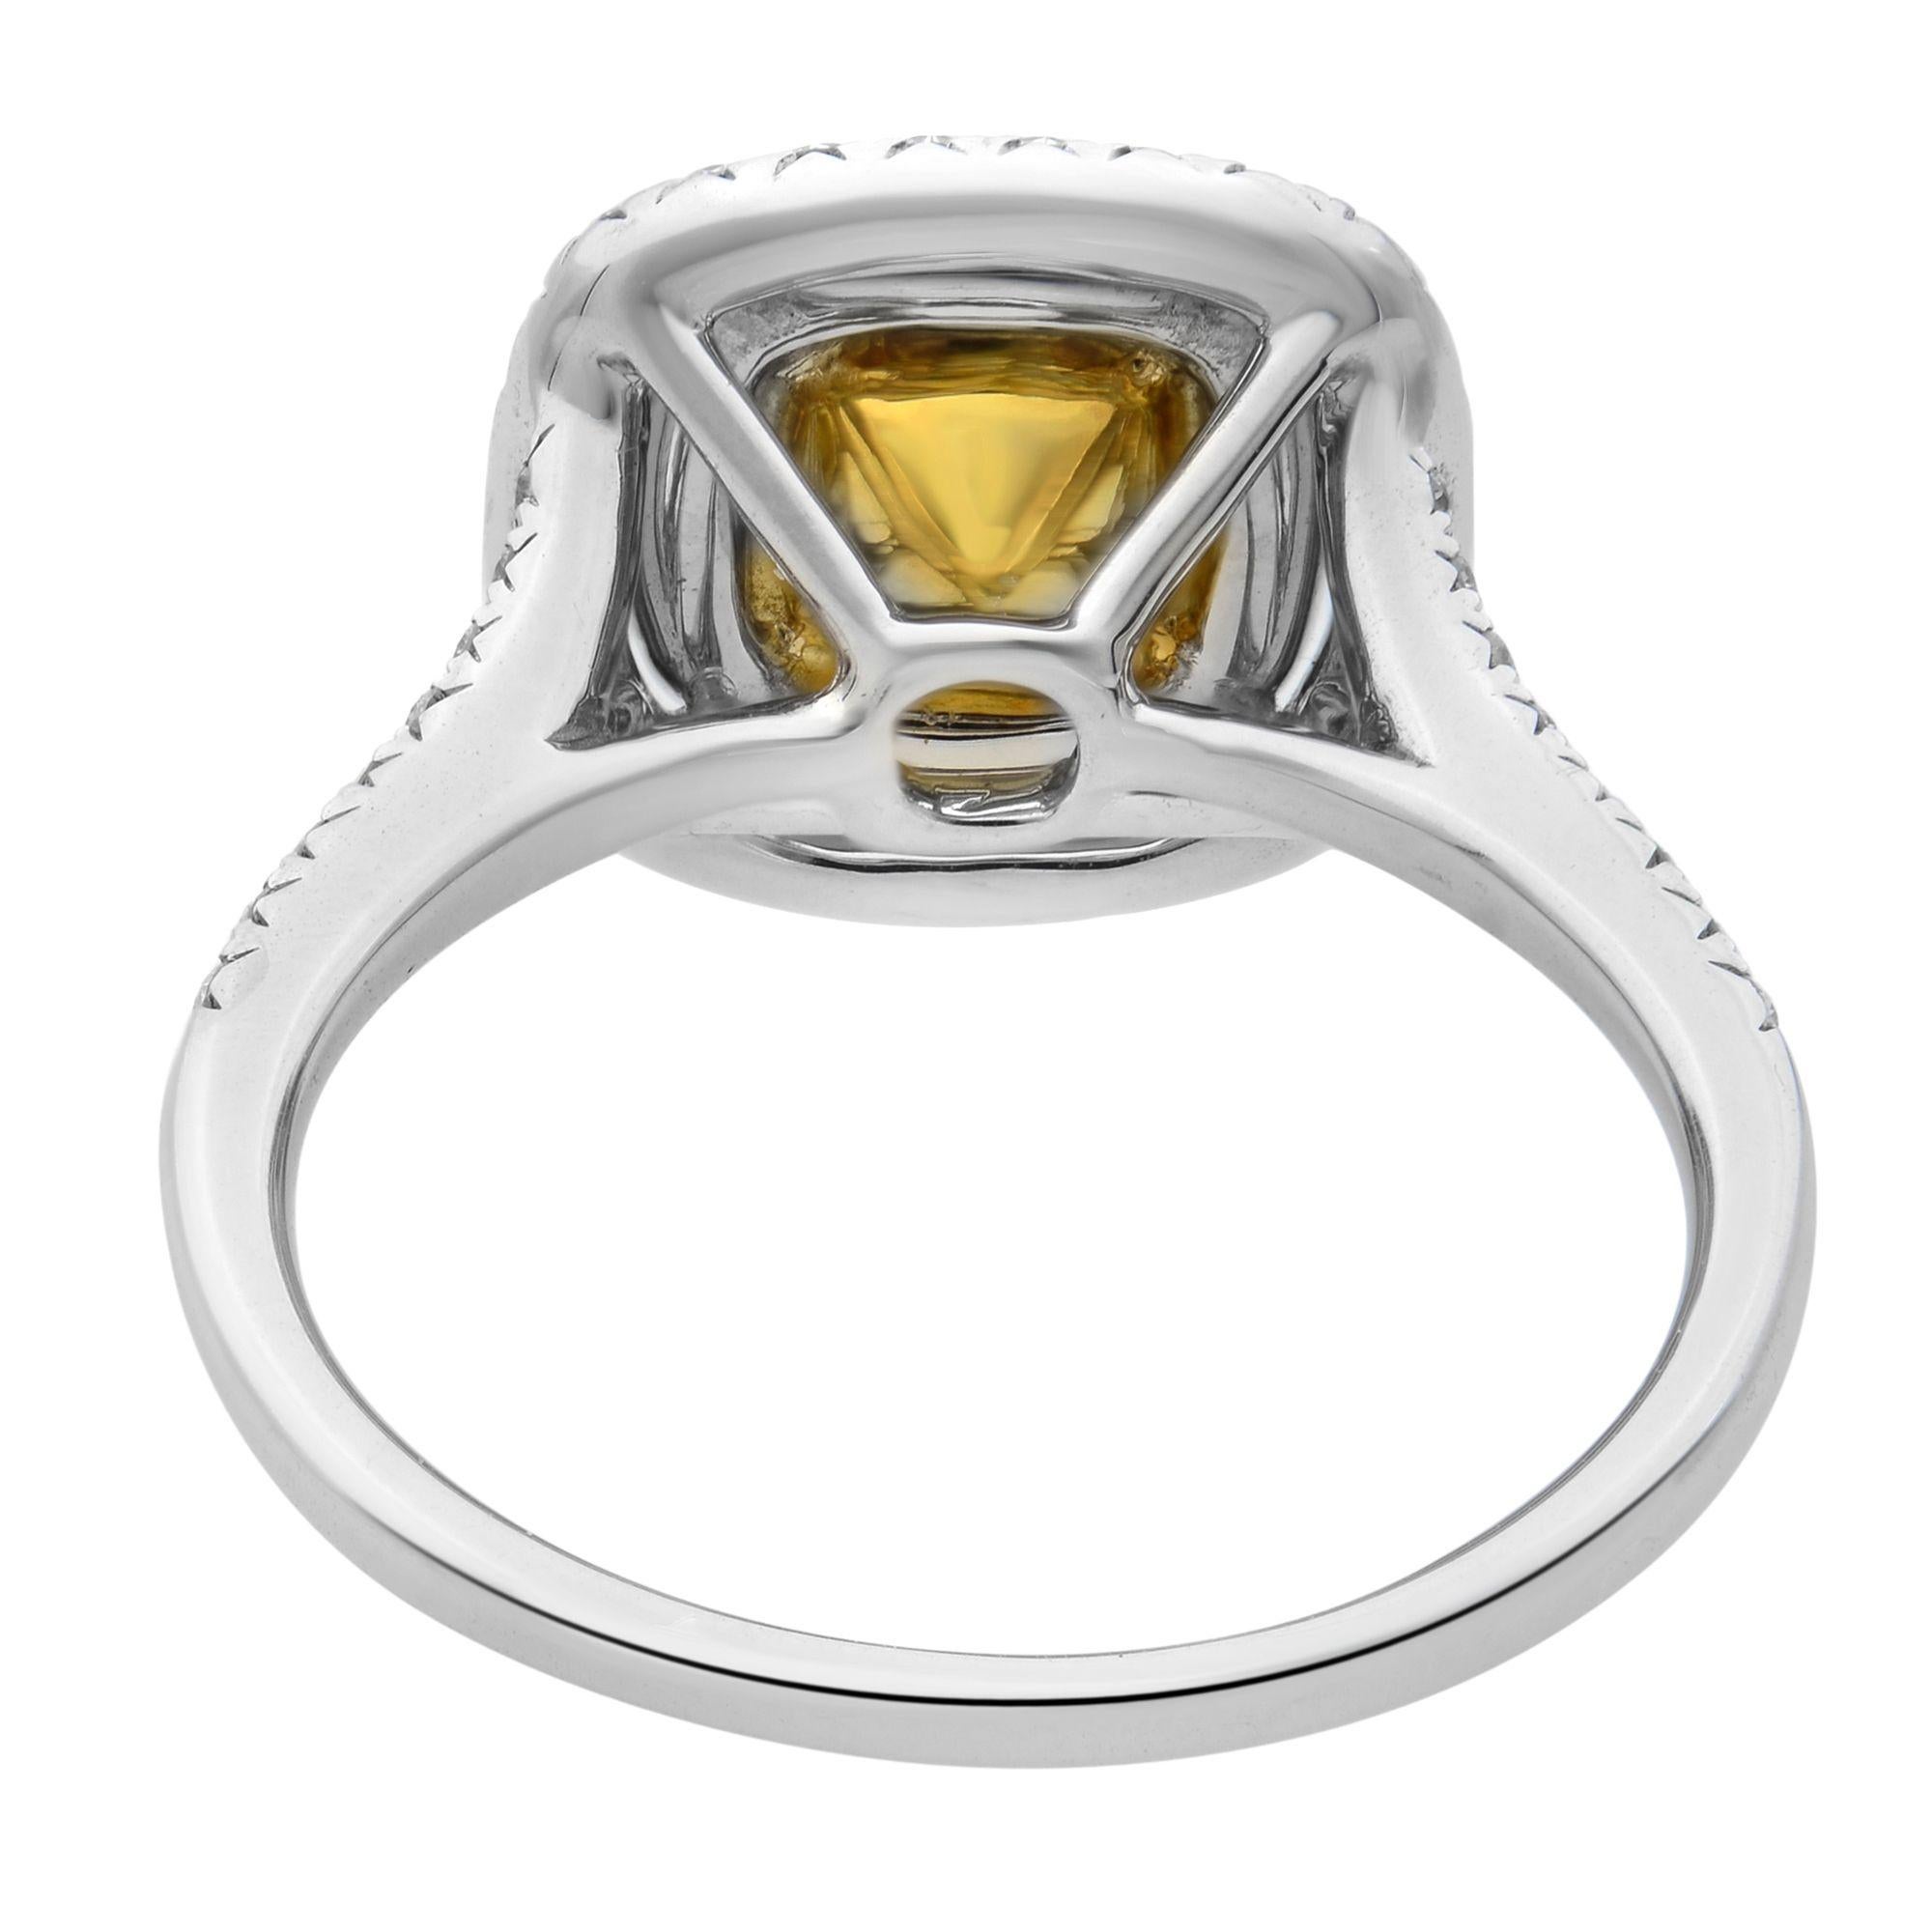 Rachel Koen 18 Karat White Gold Round Cut Fancy Yellow Diamond Ring 1.13 Carat In New Condition For Sale In New York, NY